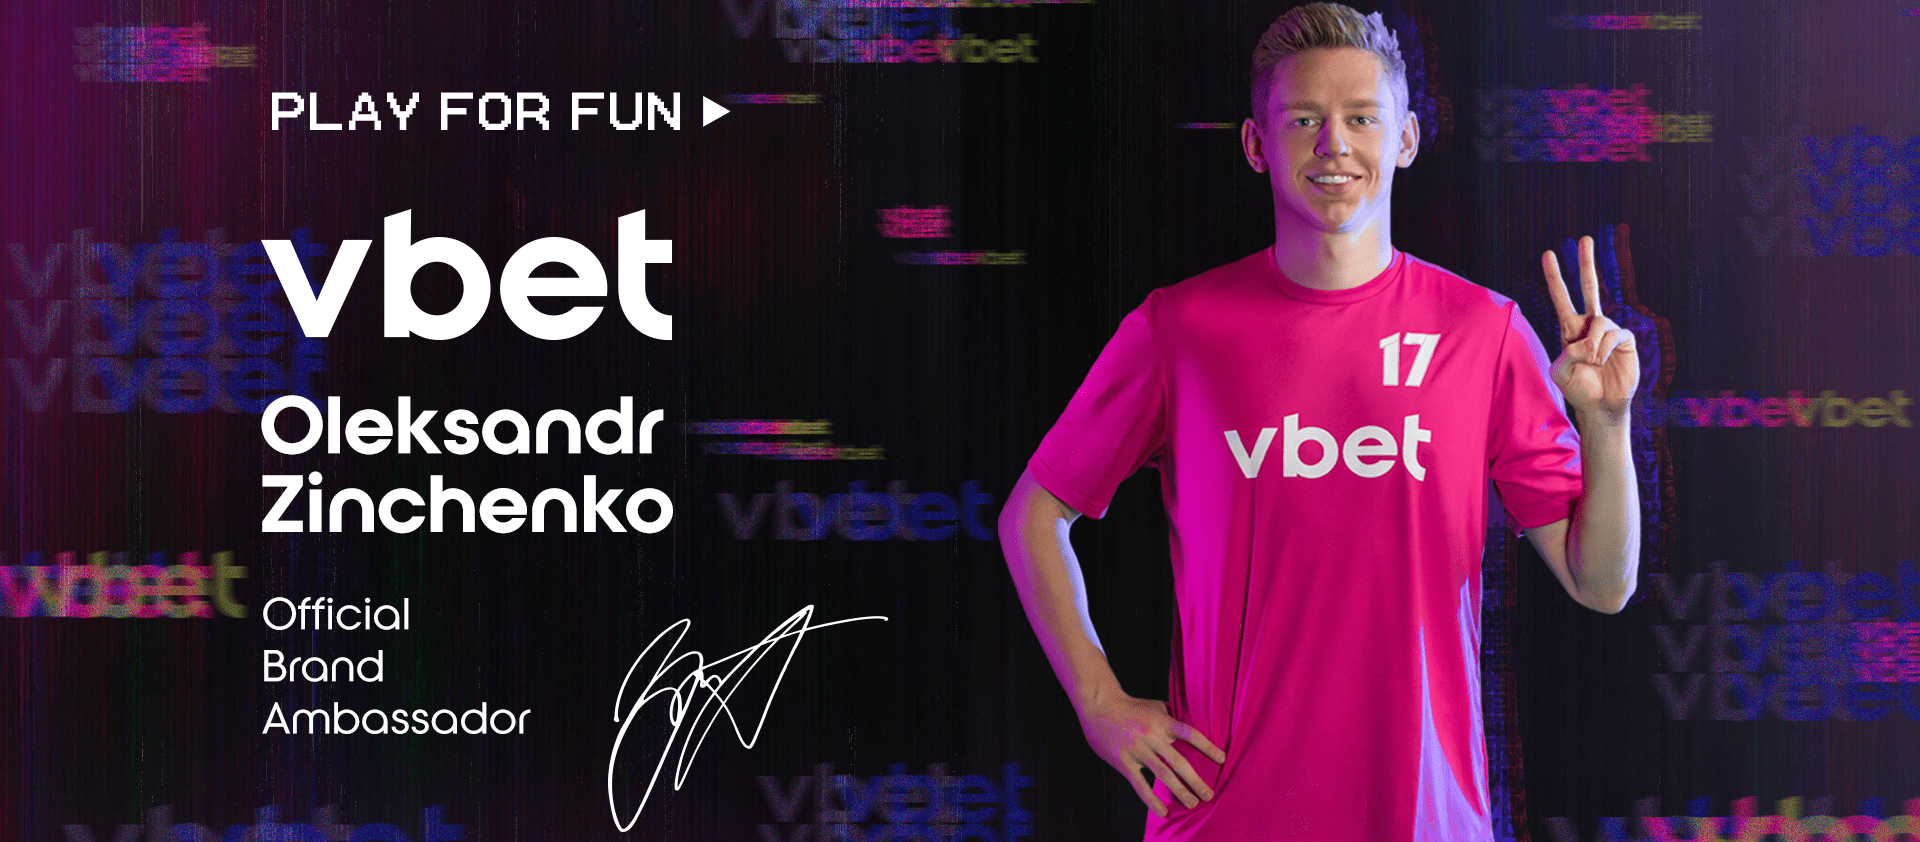 Oleksandr Zinchenko becomes VBET's ambassador